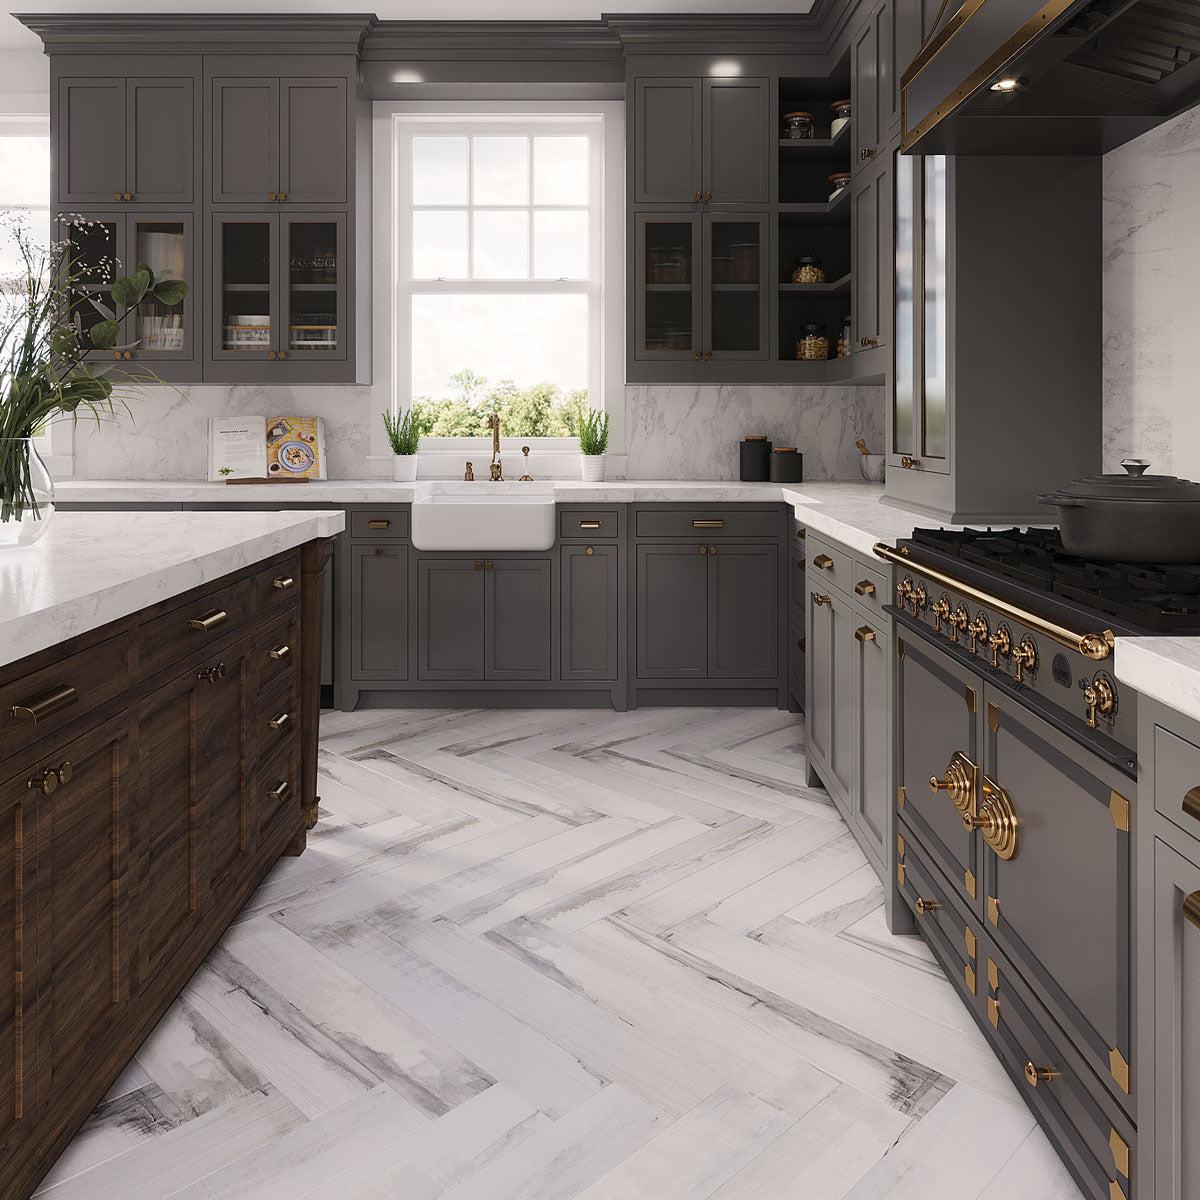 Kitchen Floor with Olson Gris Wood Look Porcelain Tiles in Gray